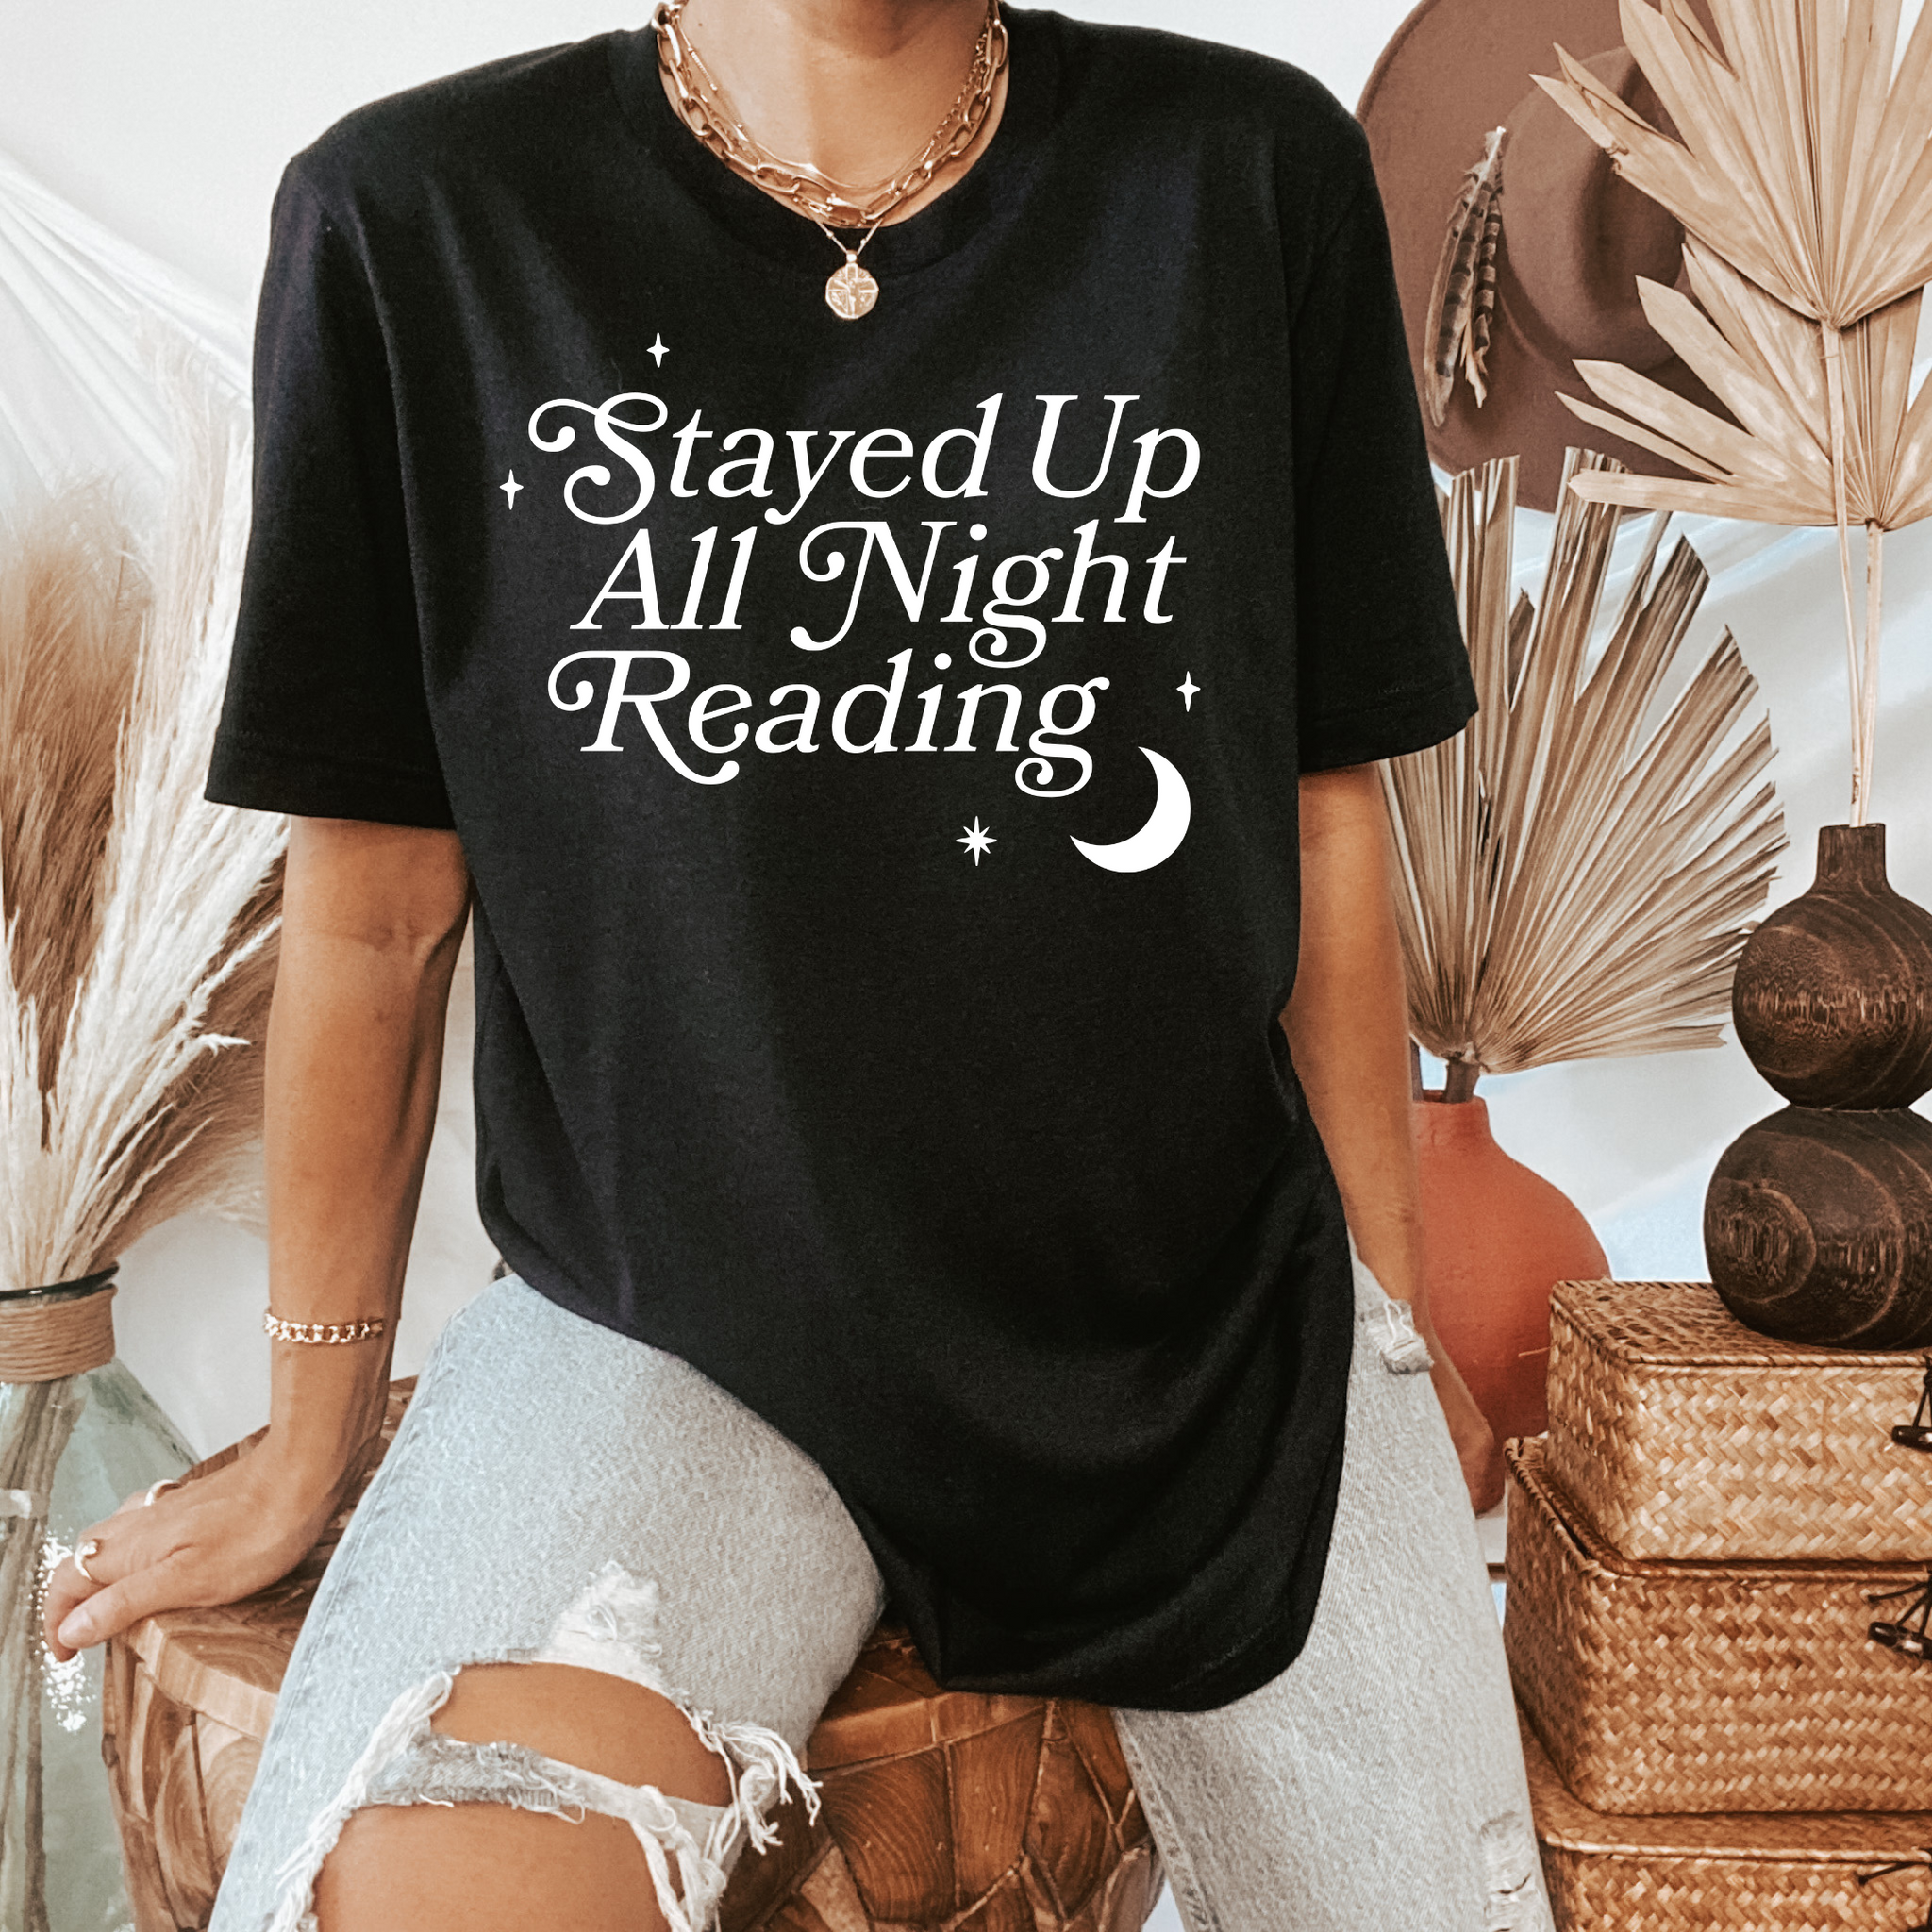 ALL NIGHT READING Bookish T-Shirt